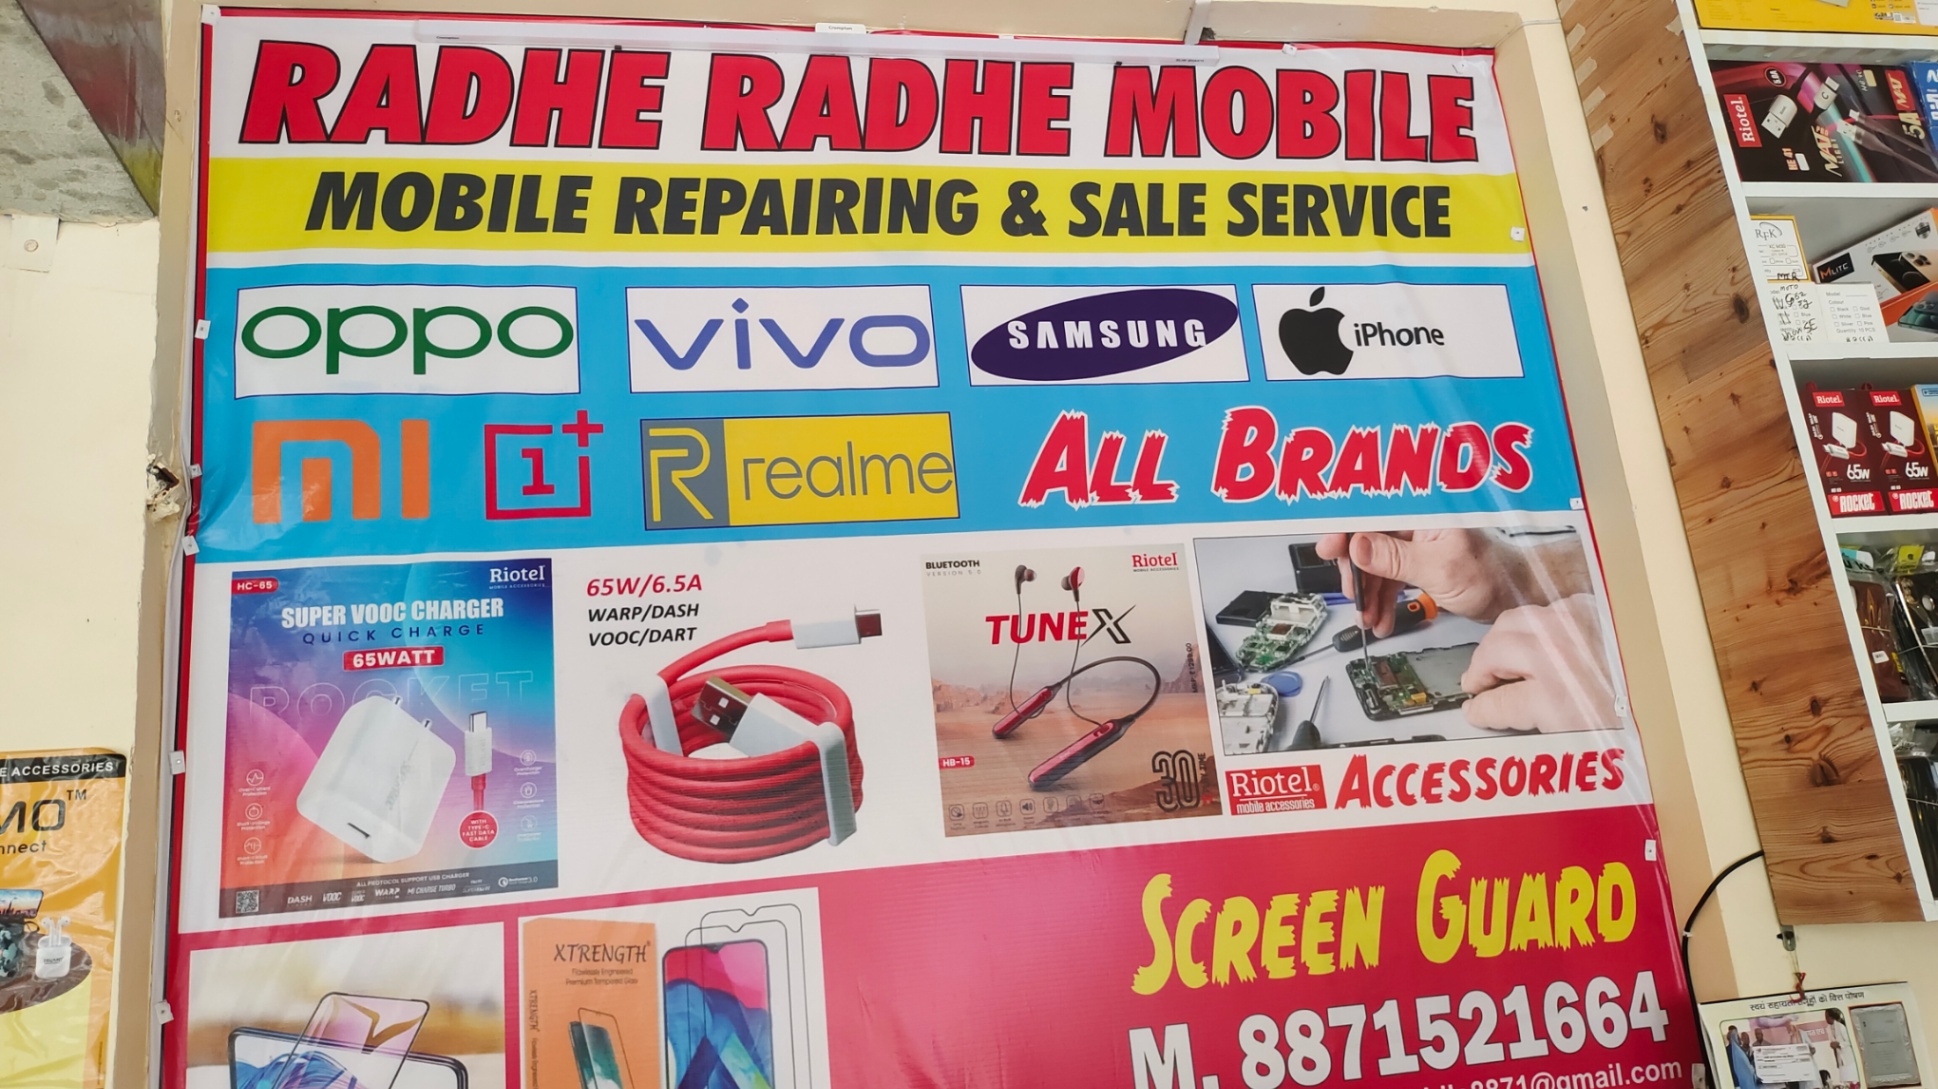 Mobile Repair & Accessories 